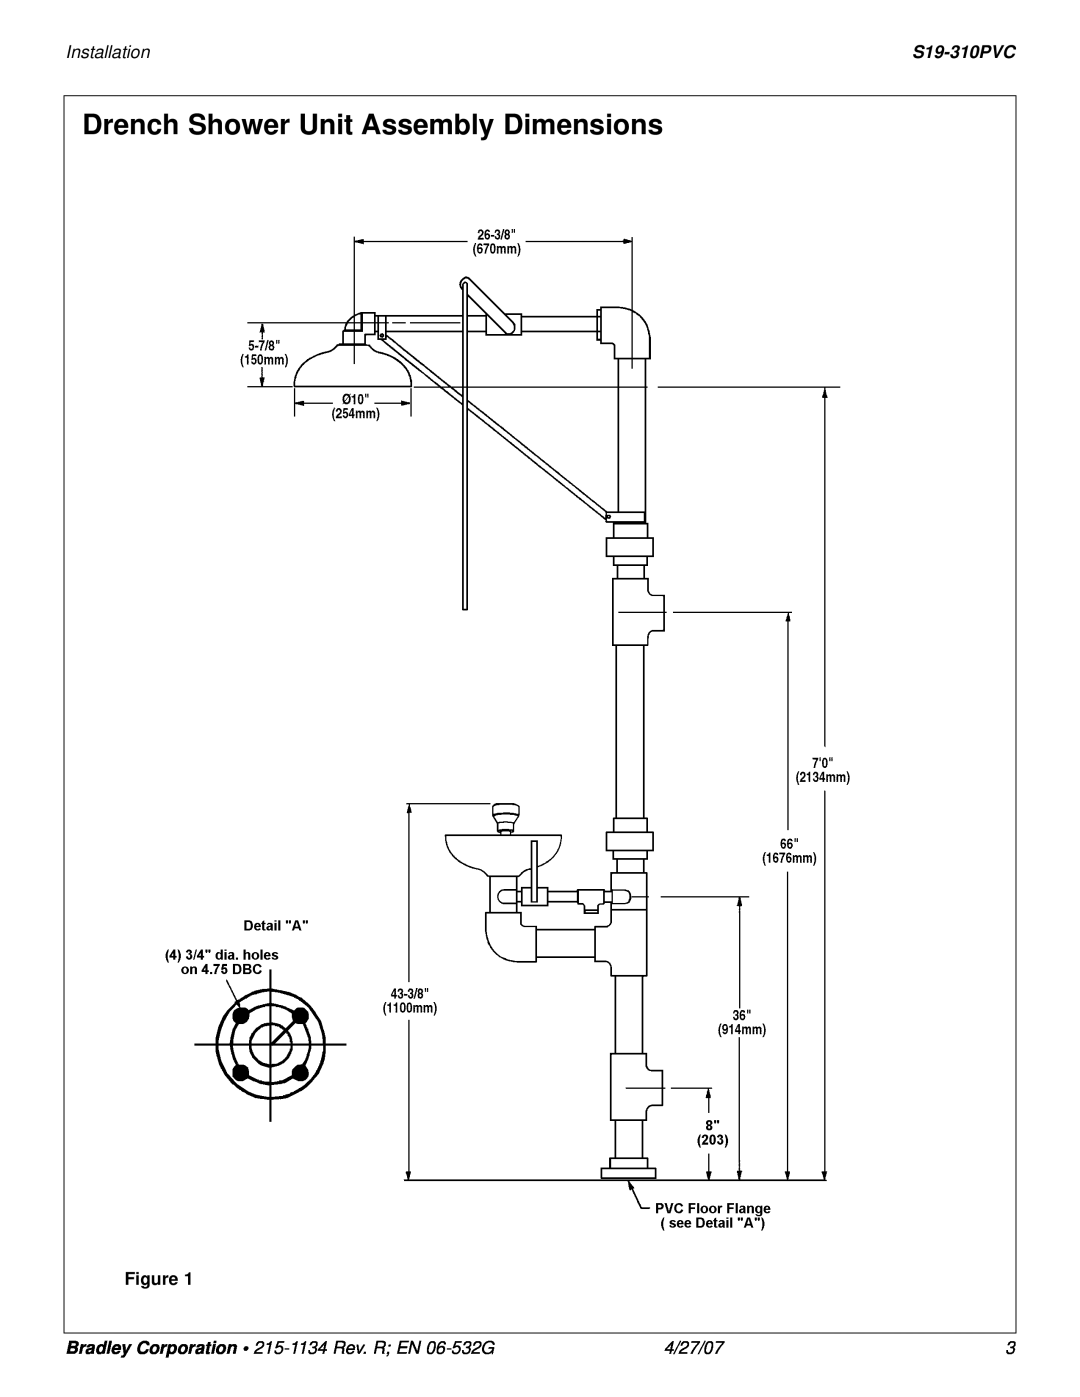 Bradley Smoker S19-310PVC installation instructions Drench Shower Unit Assembly Dimensions, Installation, 4/27/07 